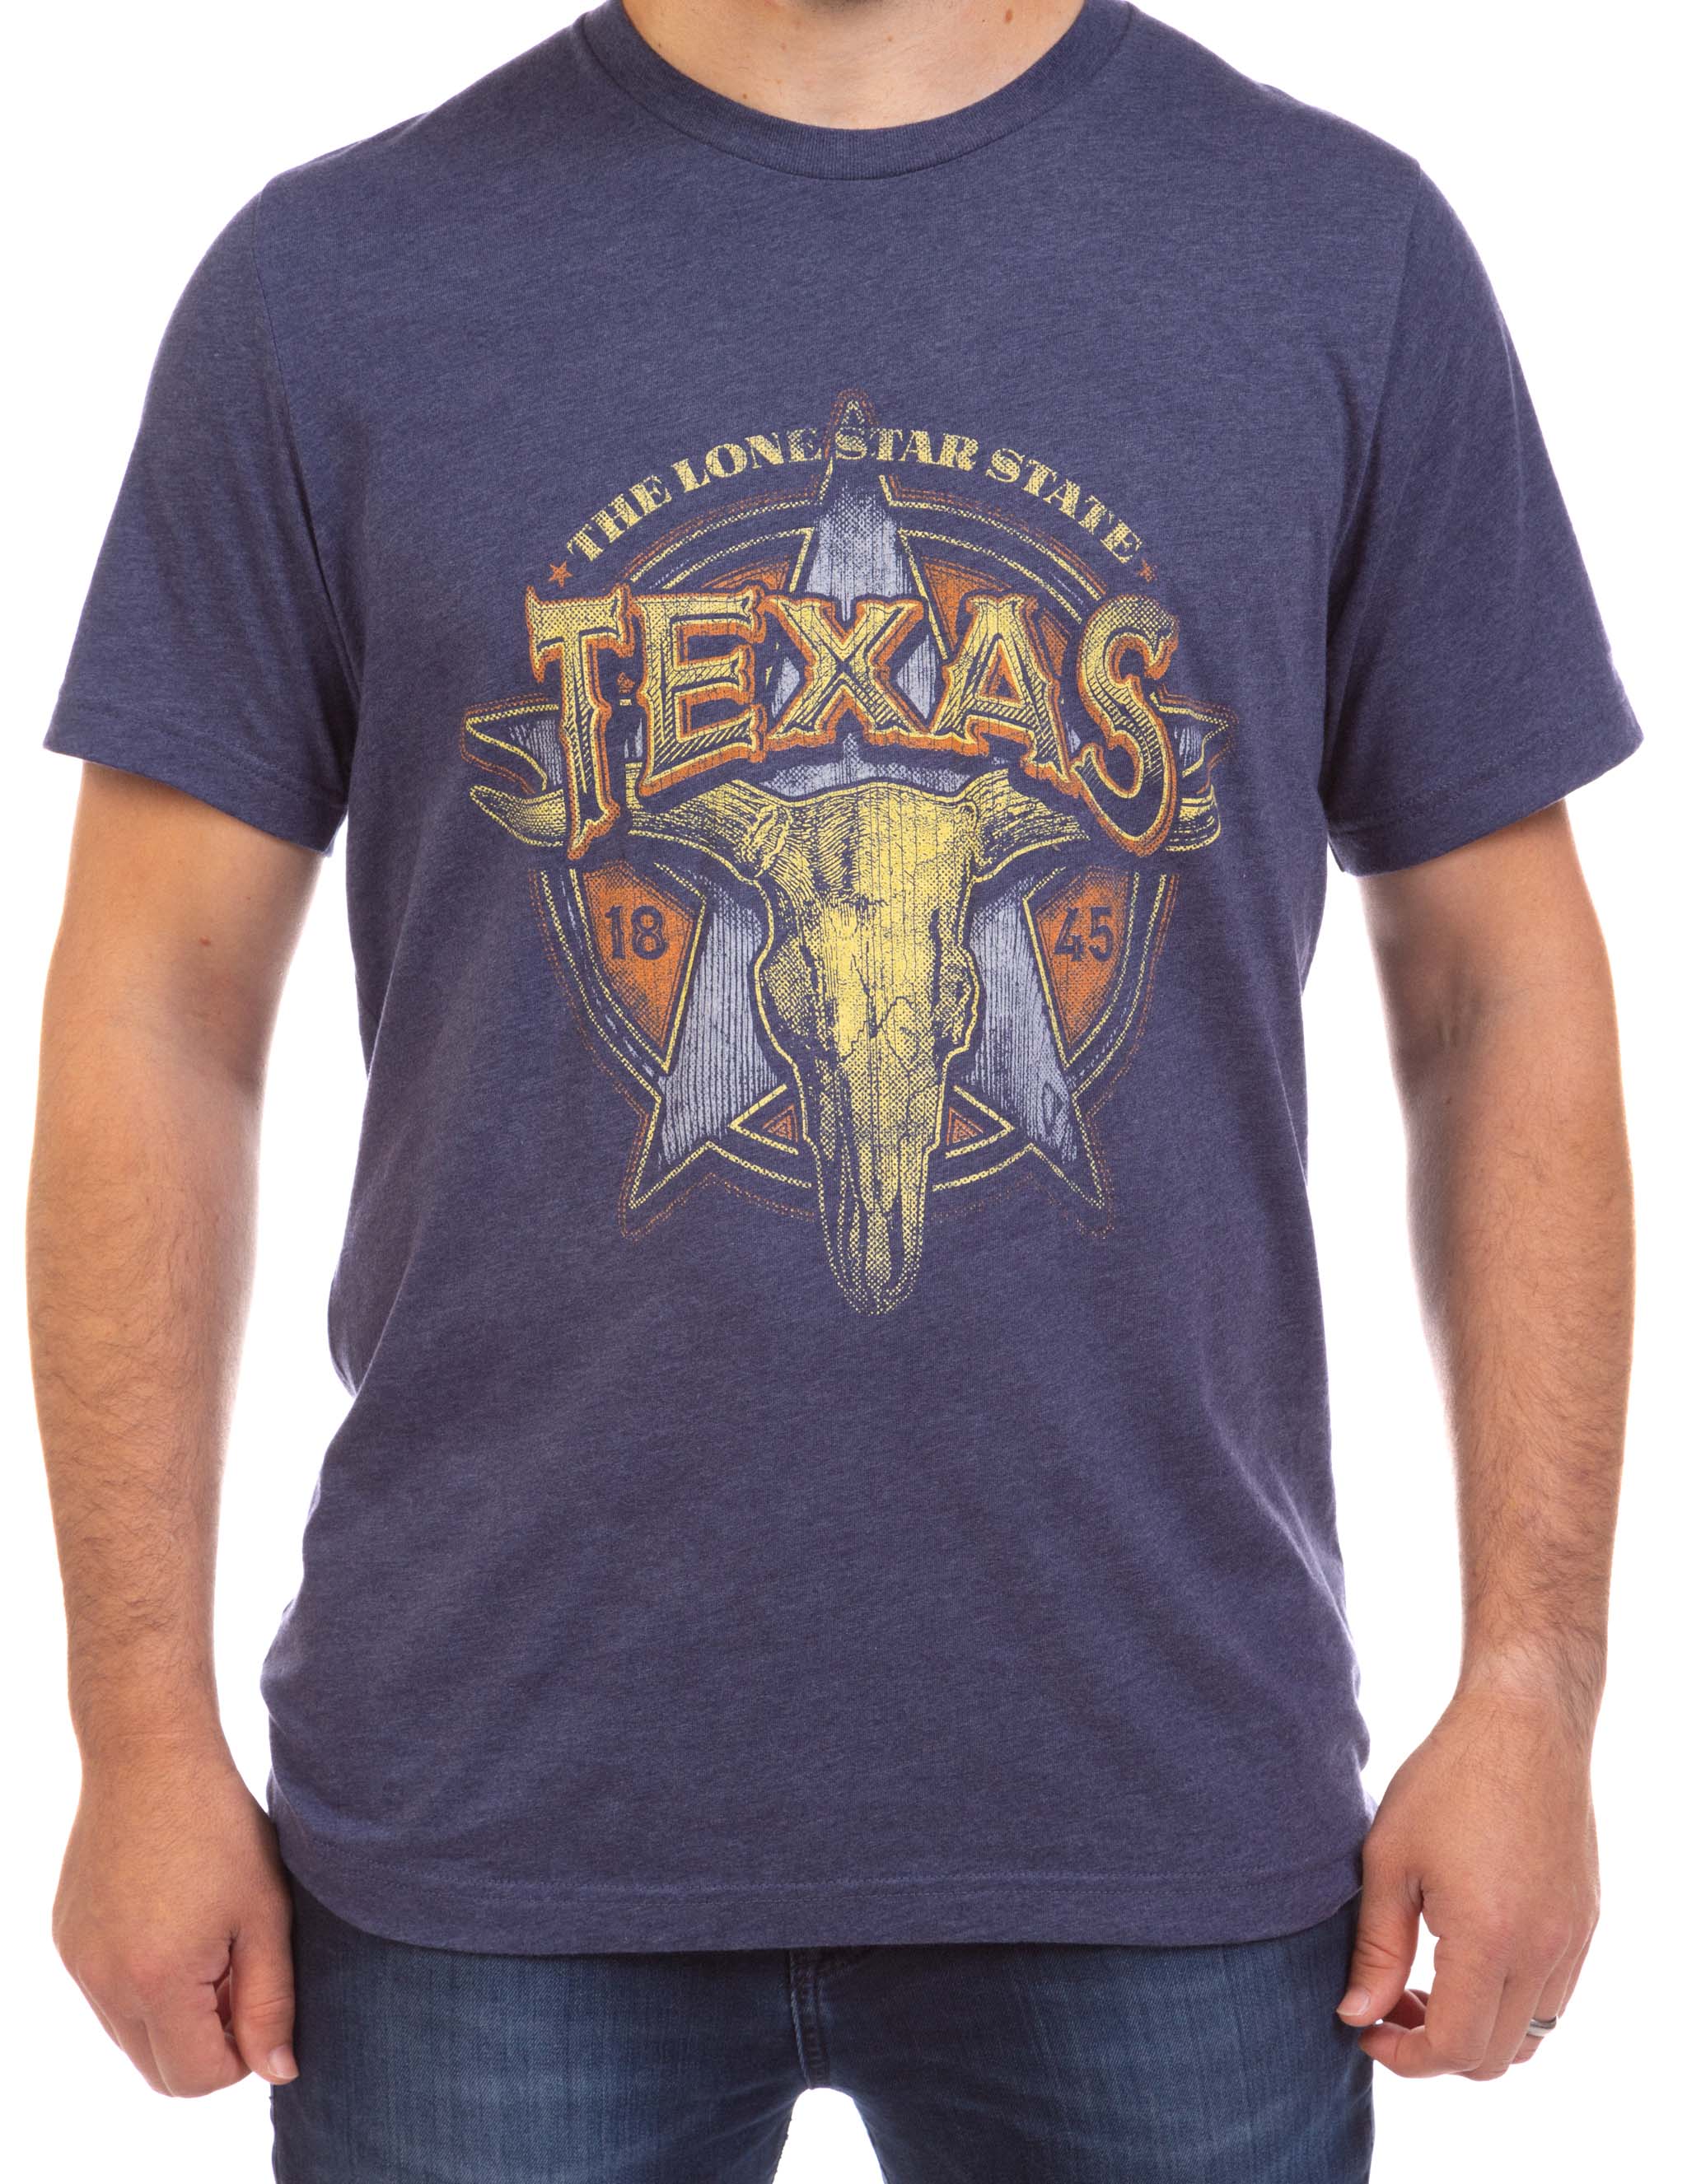 Texas Lone Star Steer T-Shirt